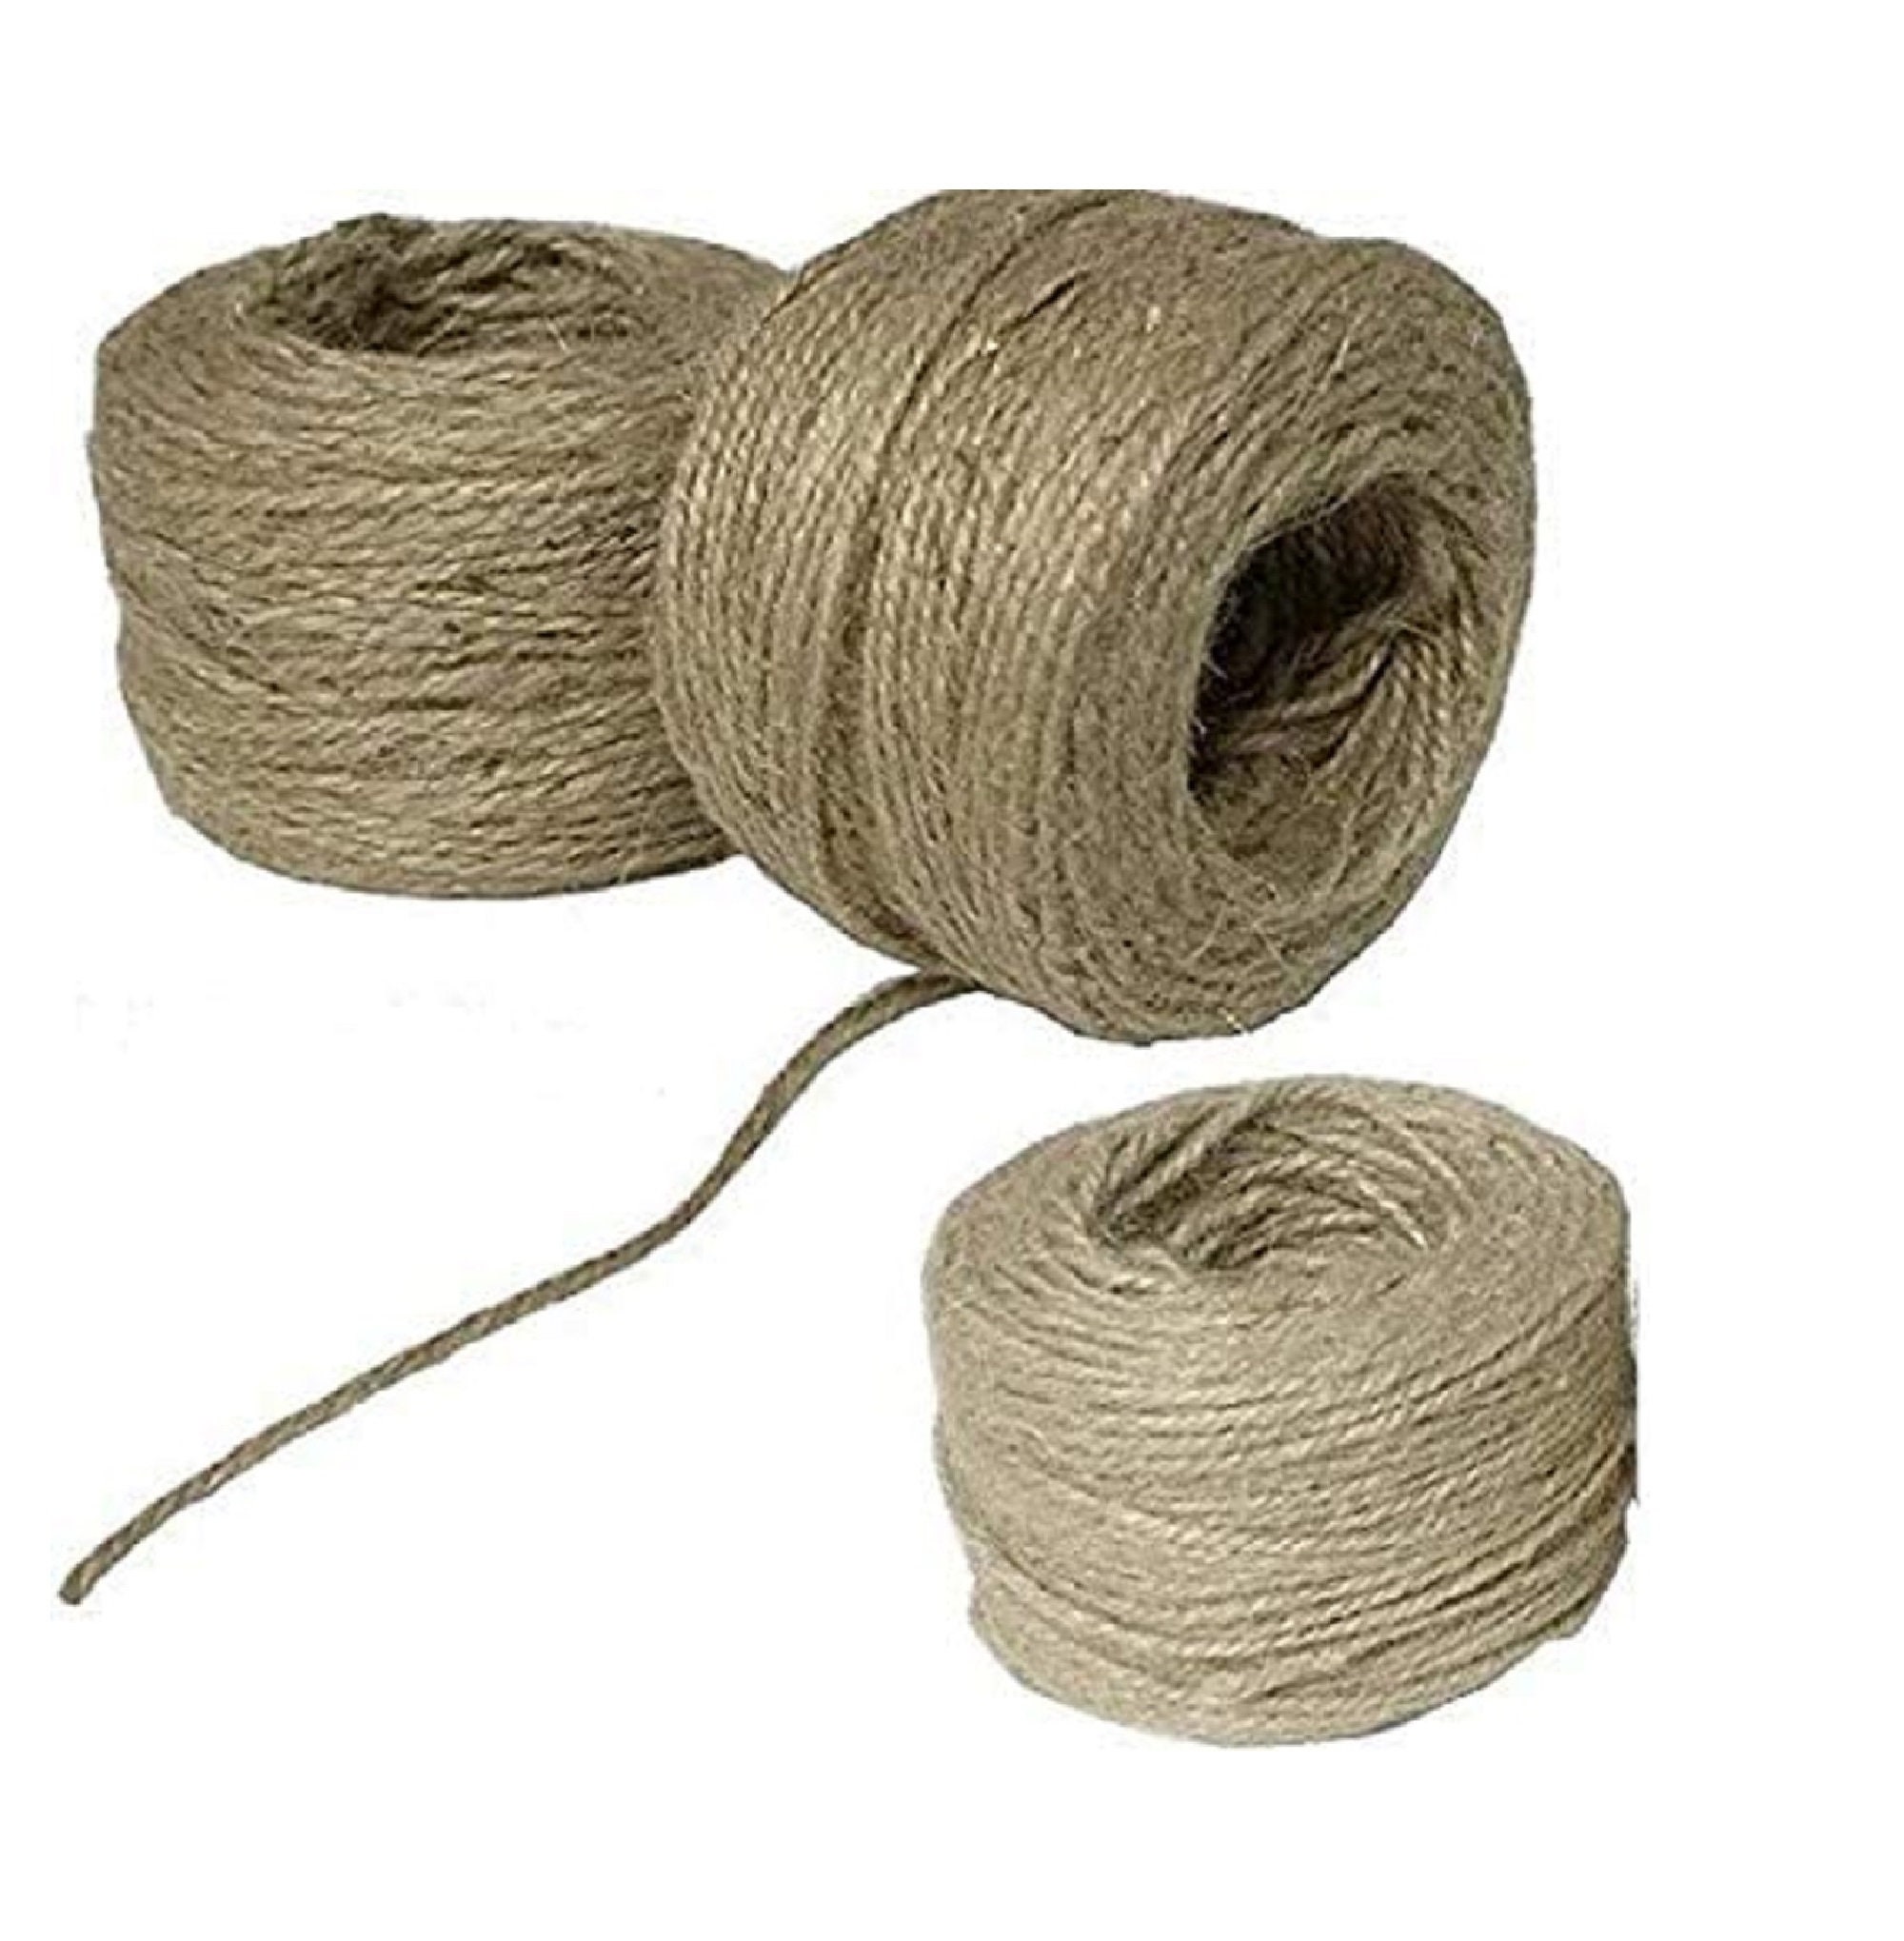 Craft Jute Burlap Ribbon Twine Rope Cord String Pack Roll Tan 2mm Dia 50m  Length 